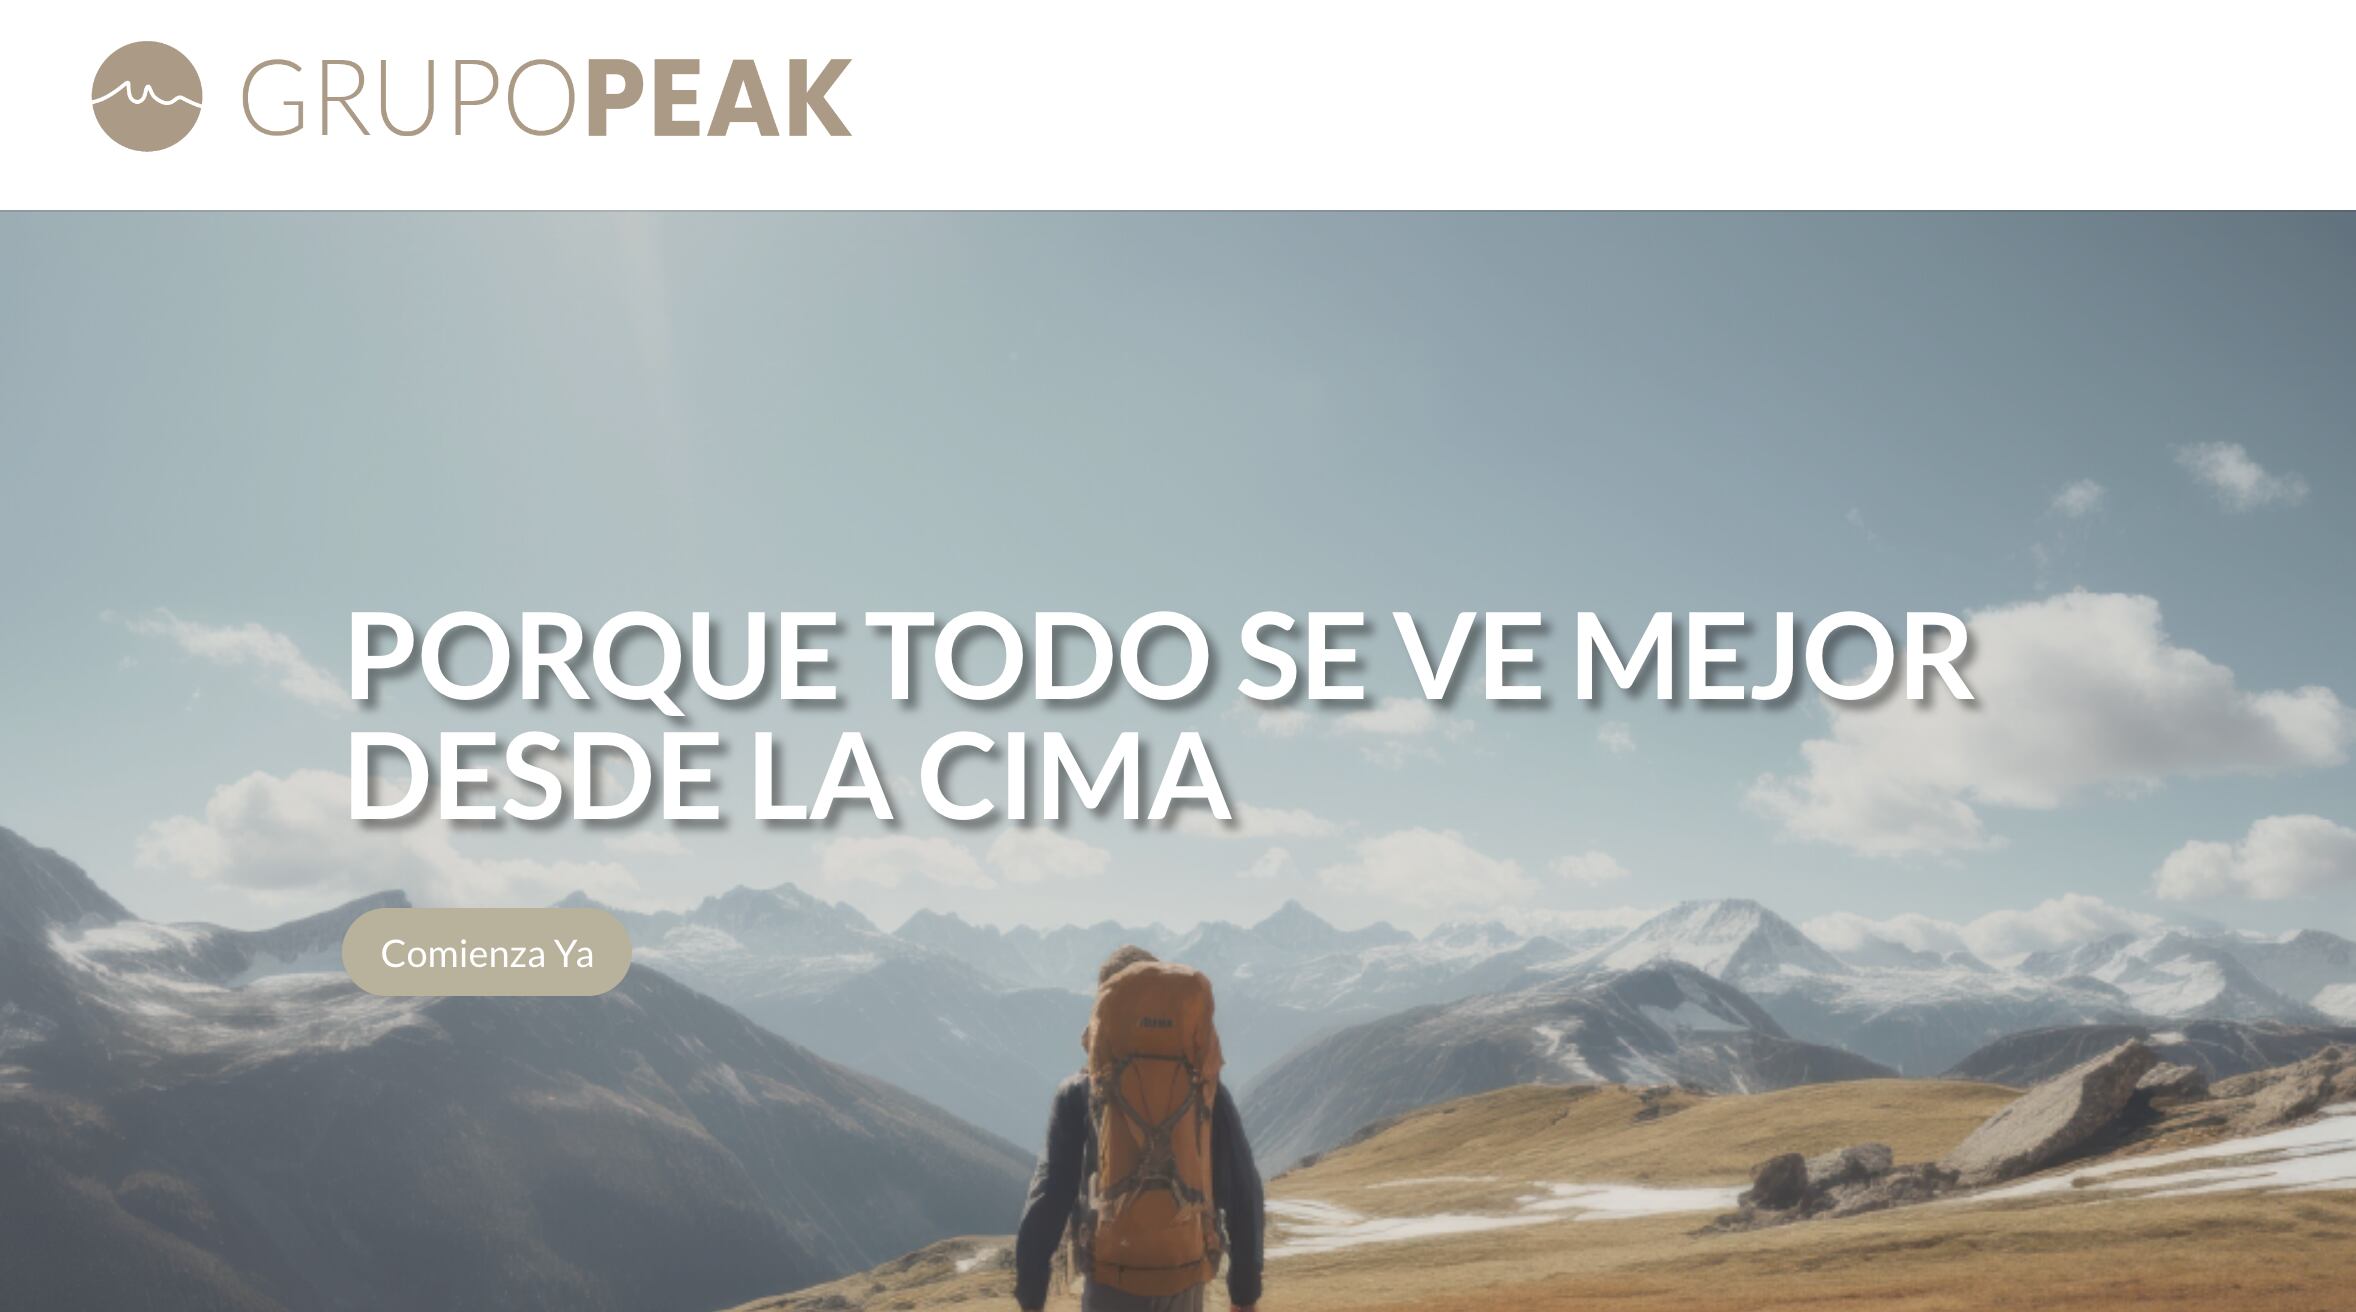 Grupo Peak